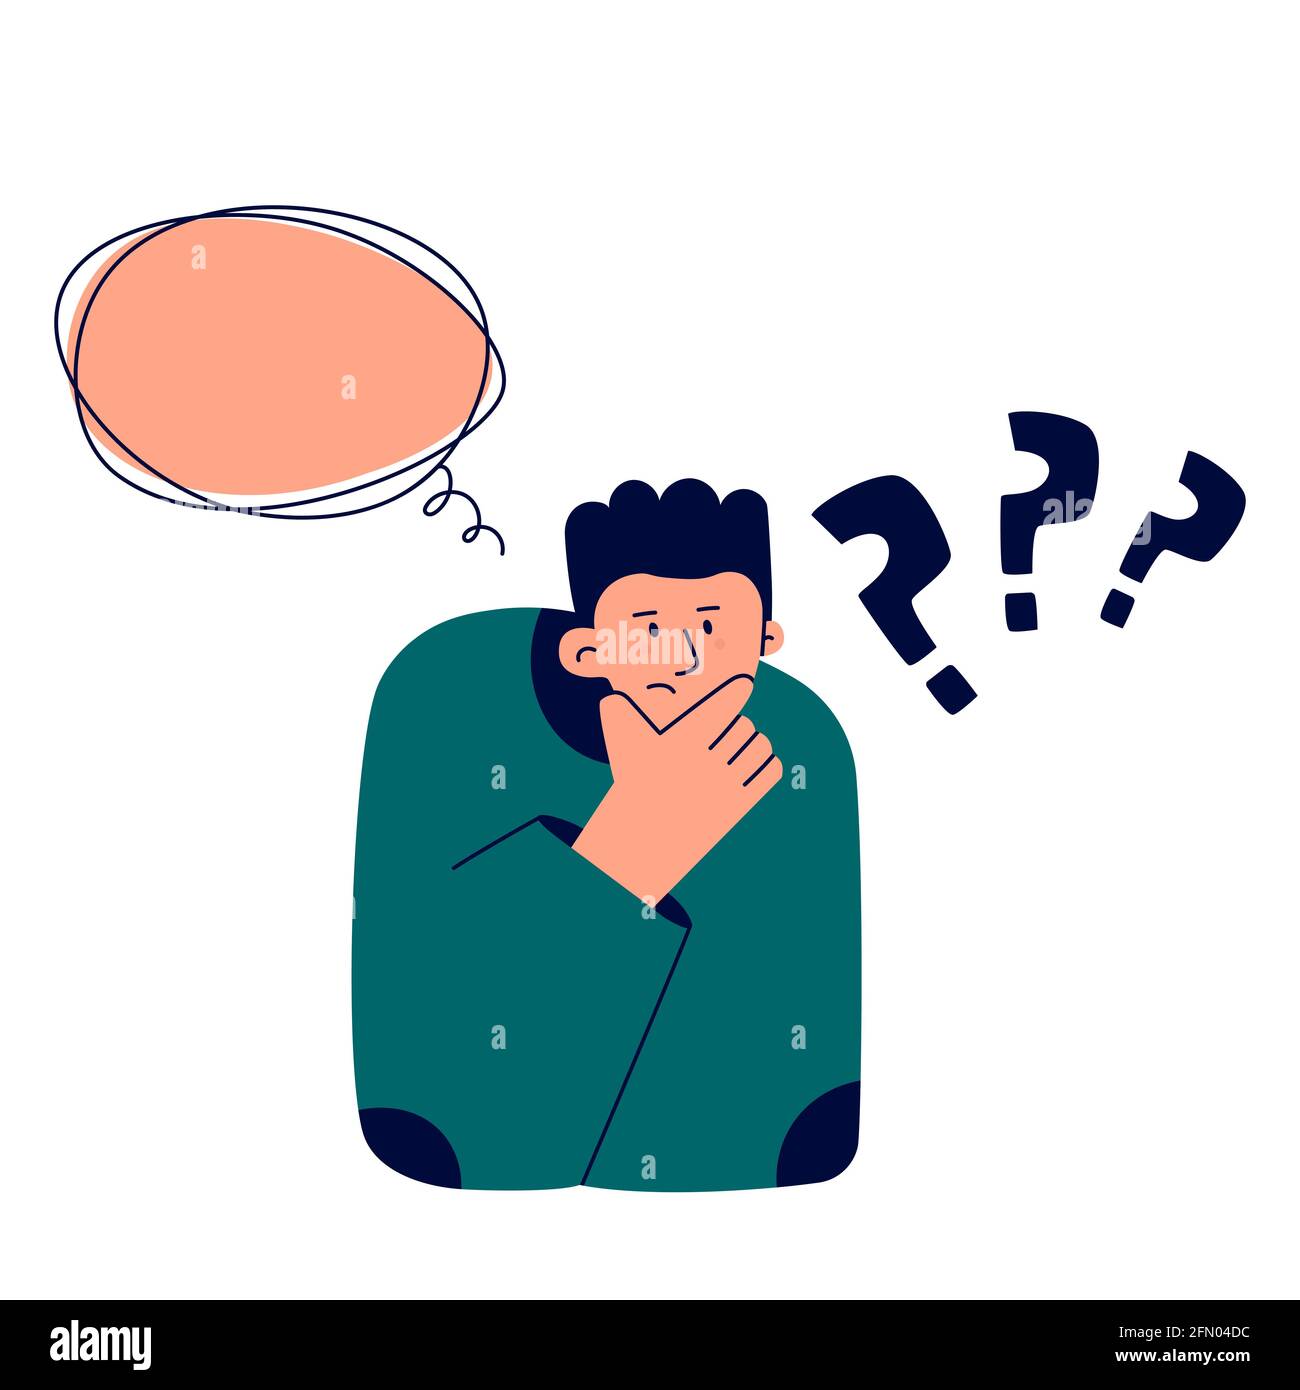 Question mark stock illustration. Illustration of problem - 29885706